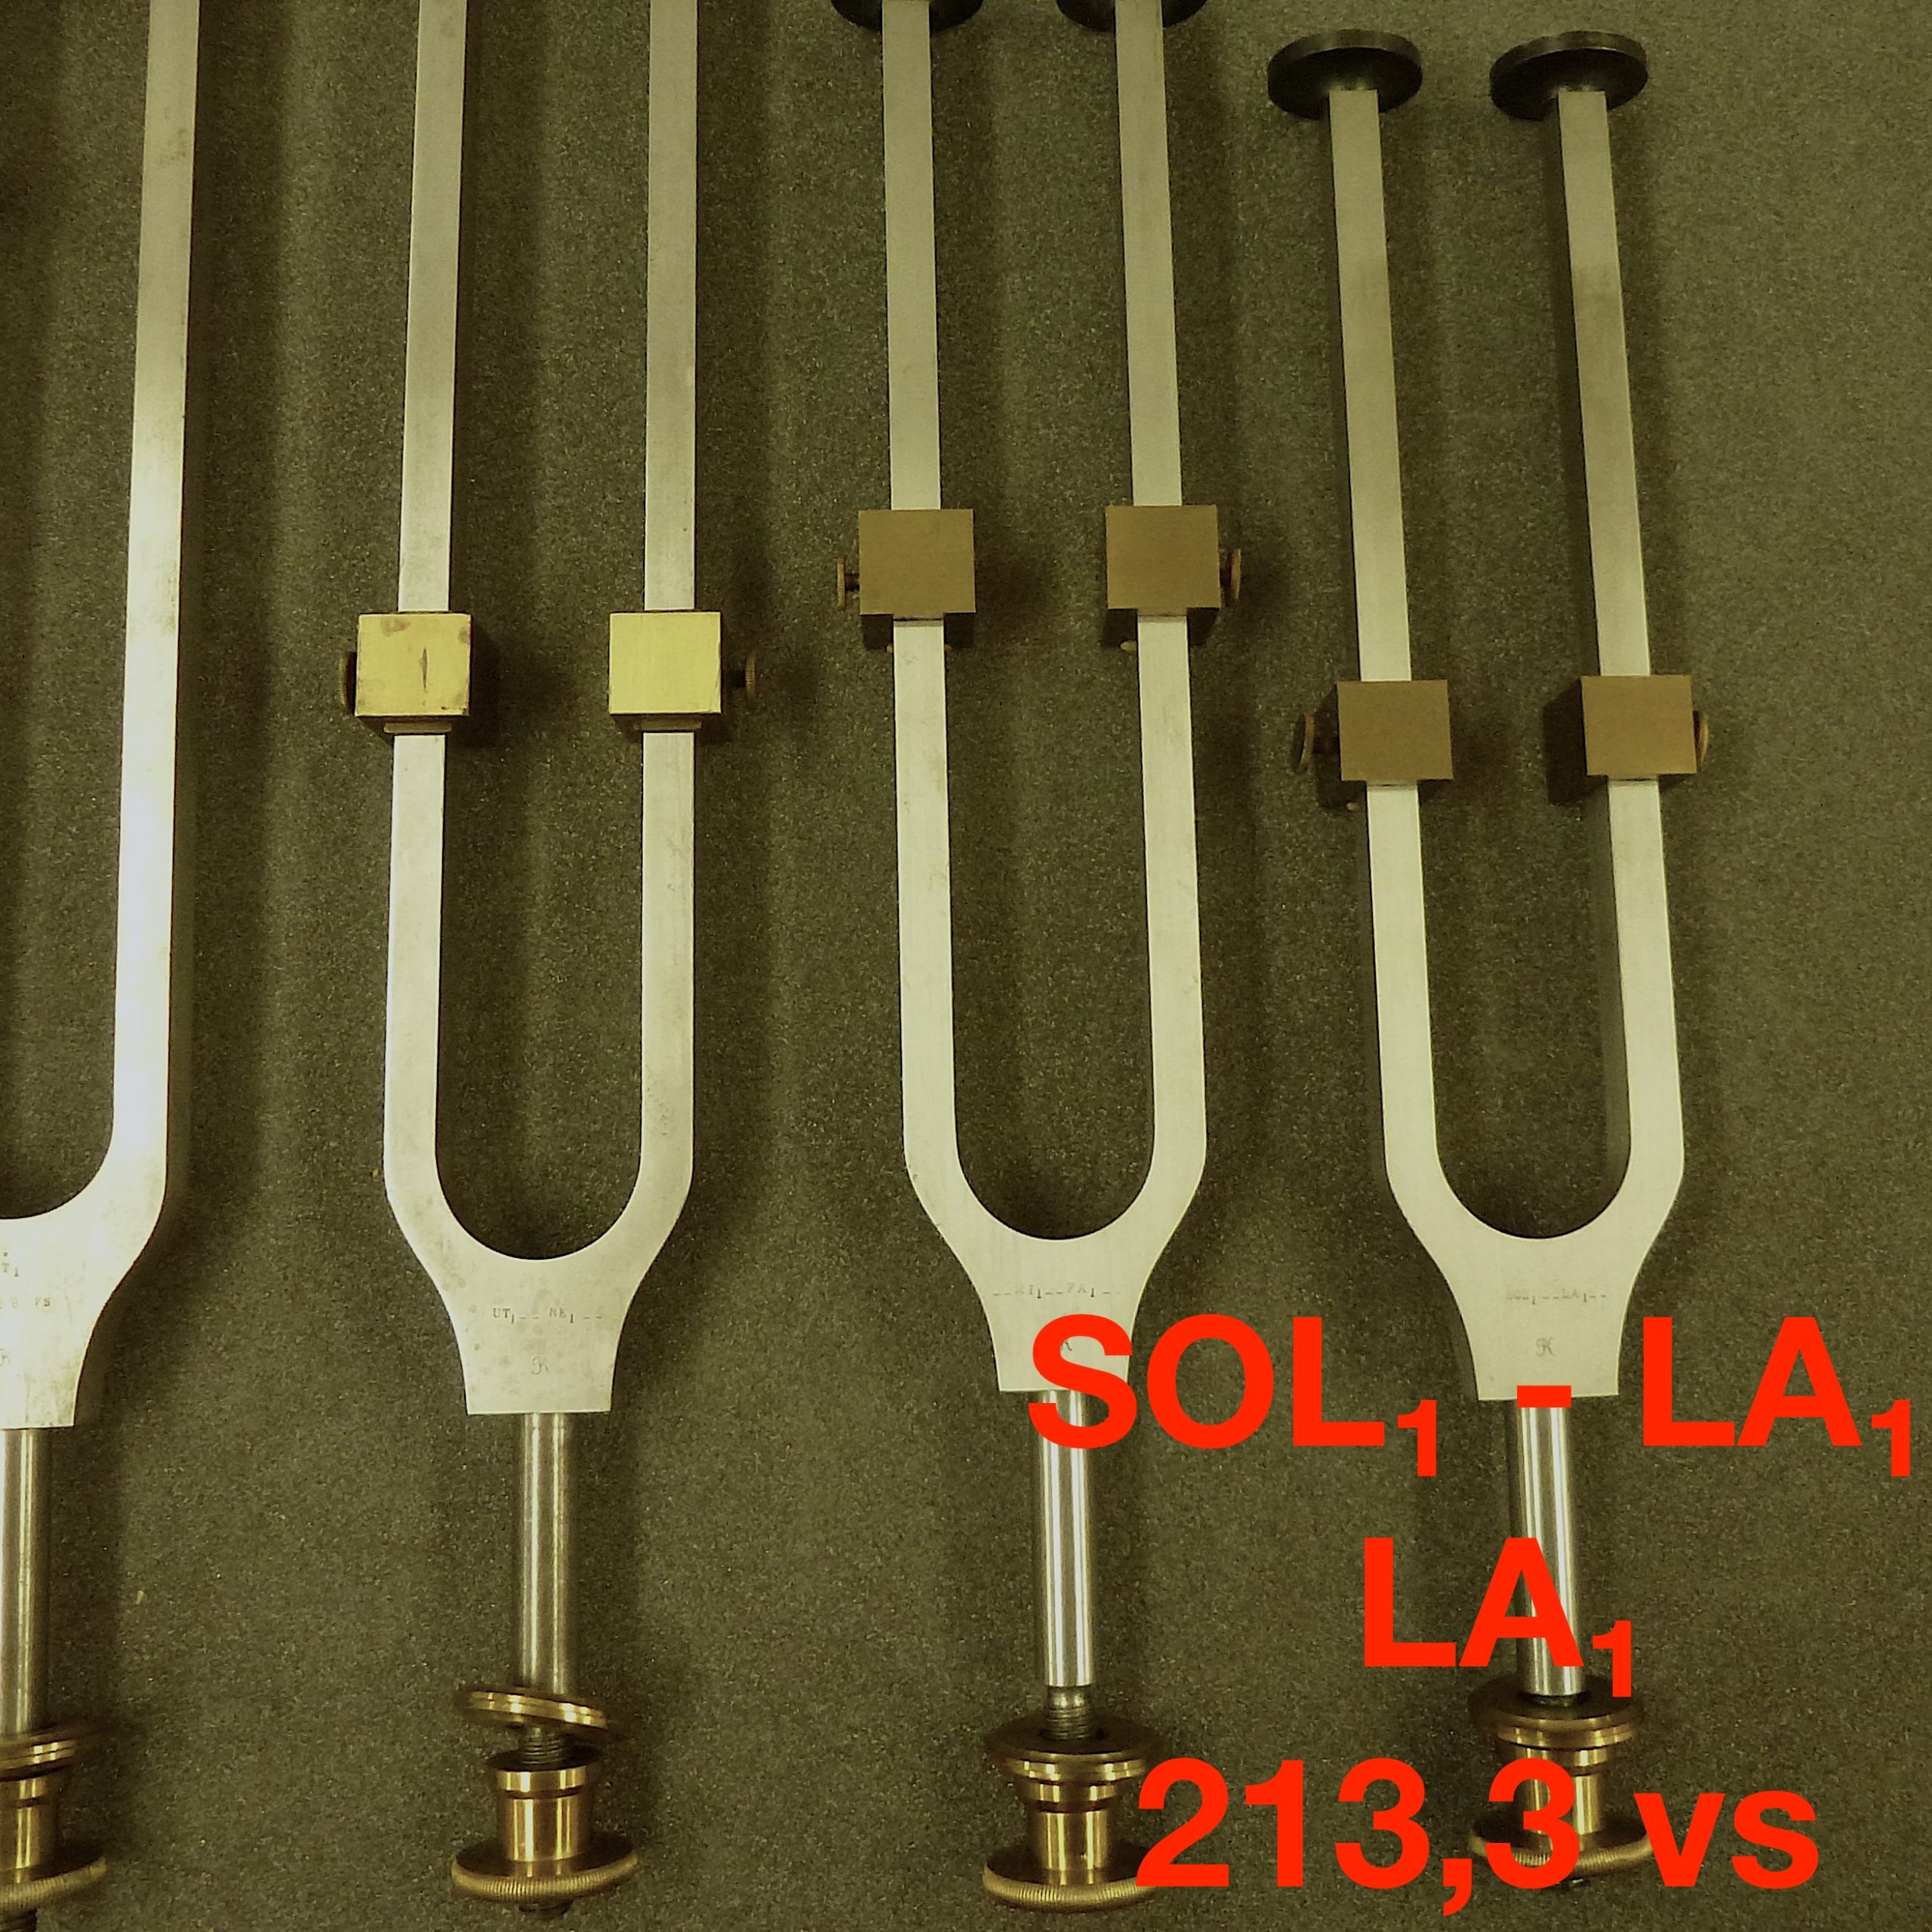 Tuning fork by Dr. R. König: SOL₁ - LA₁: LA₁ 213,3 vs